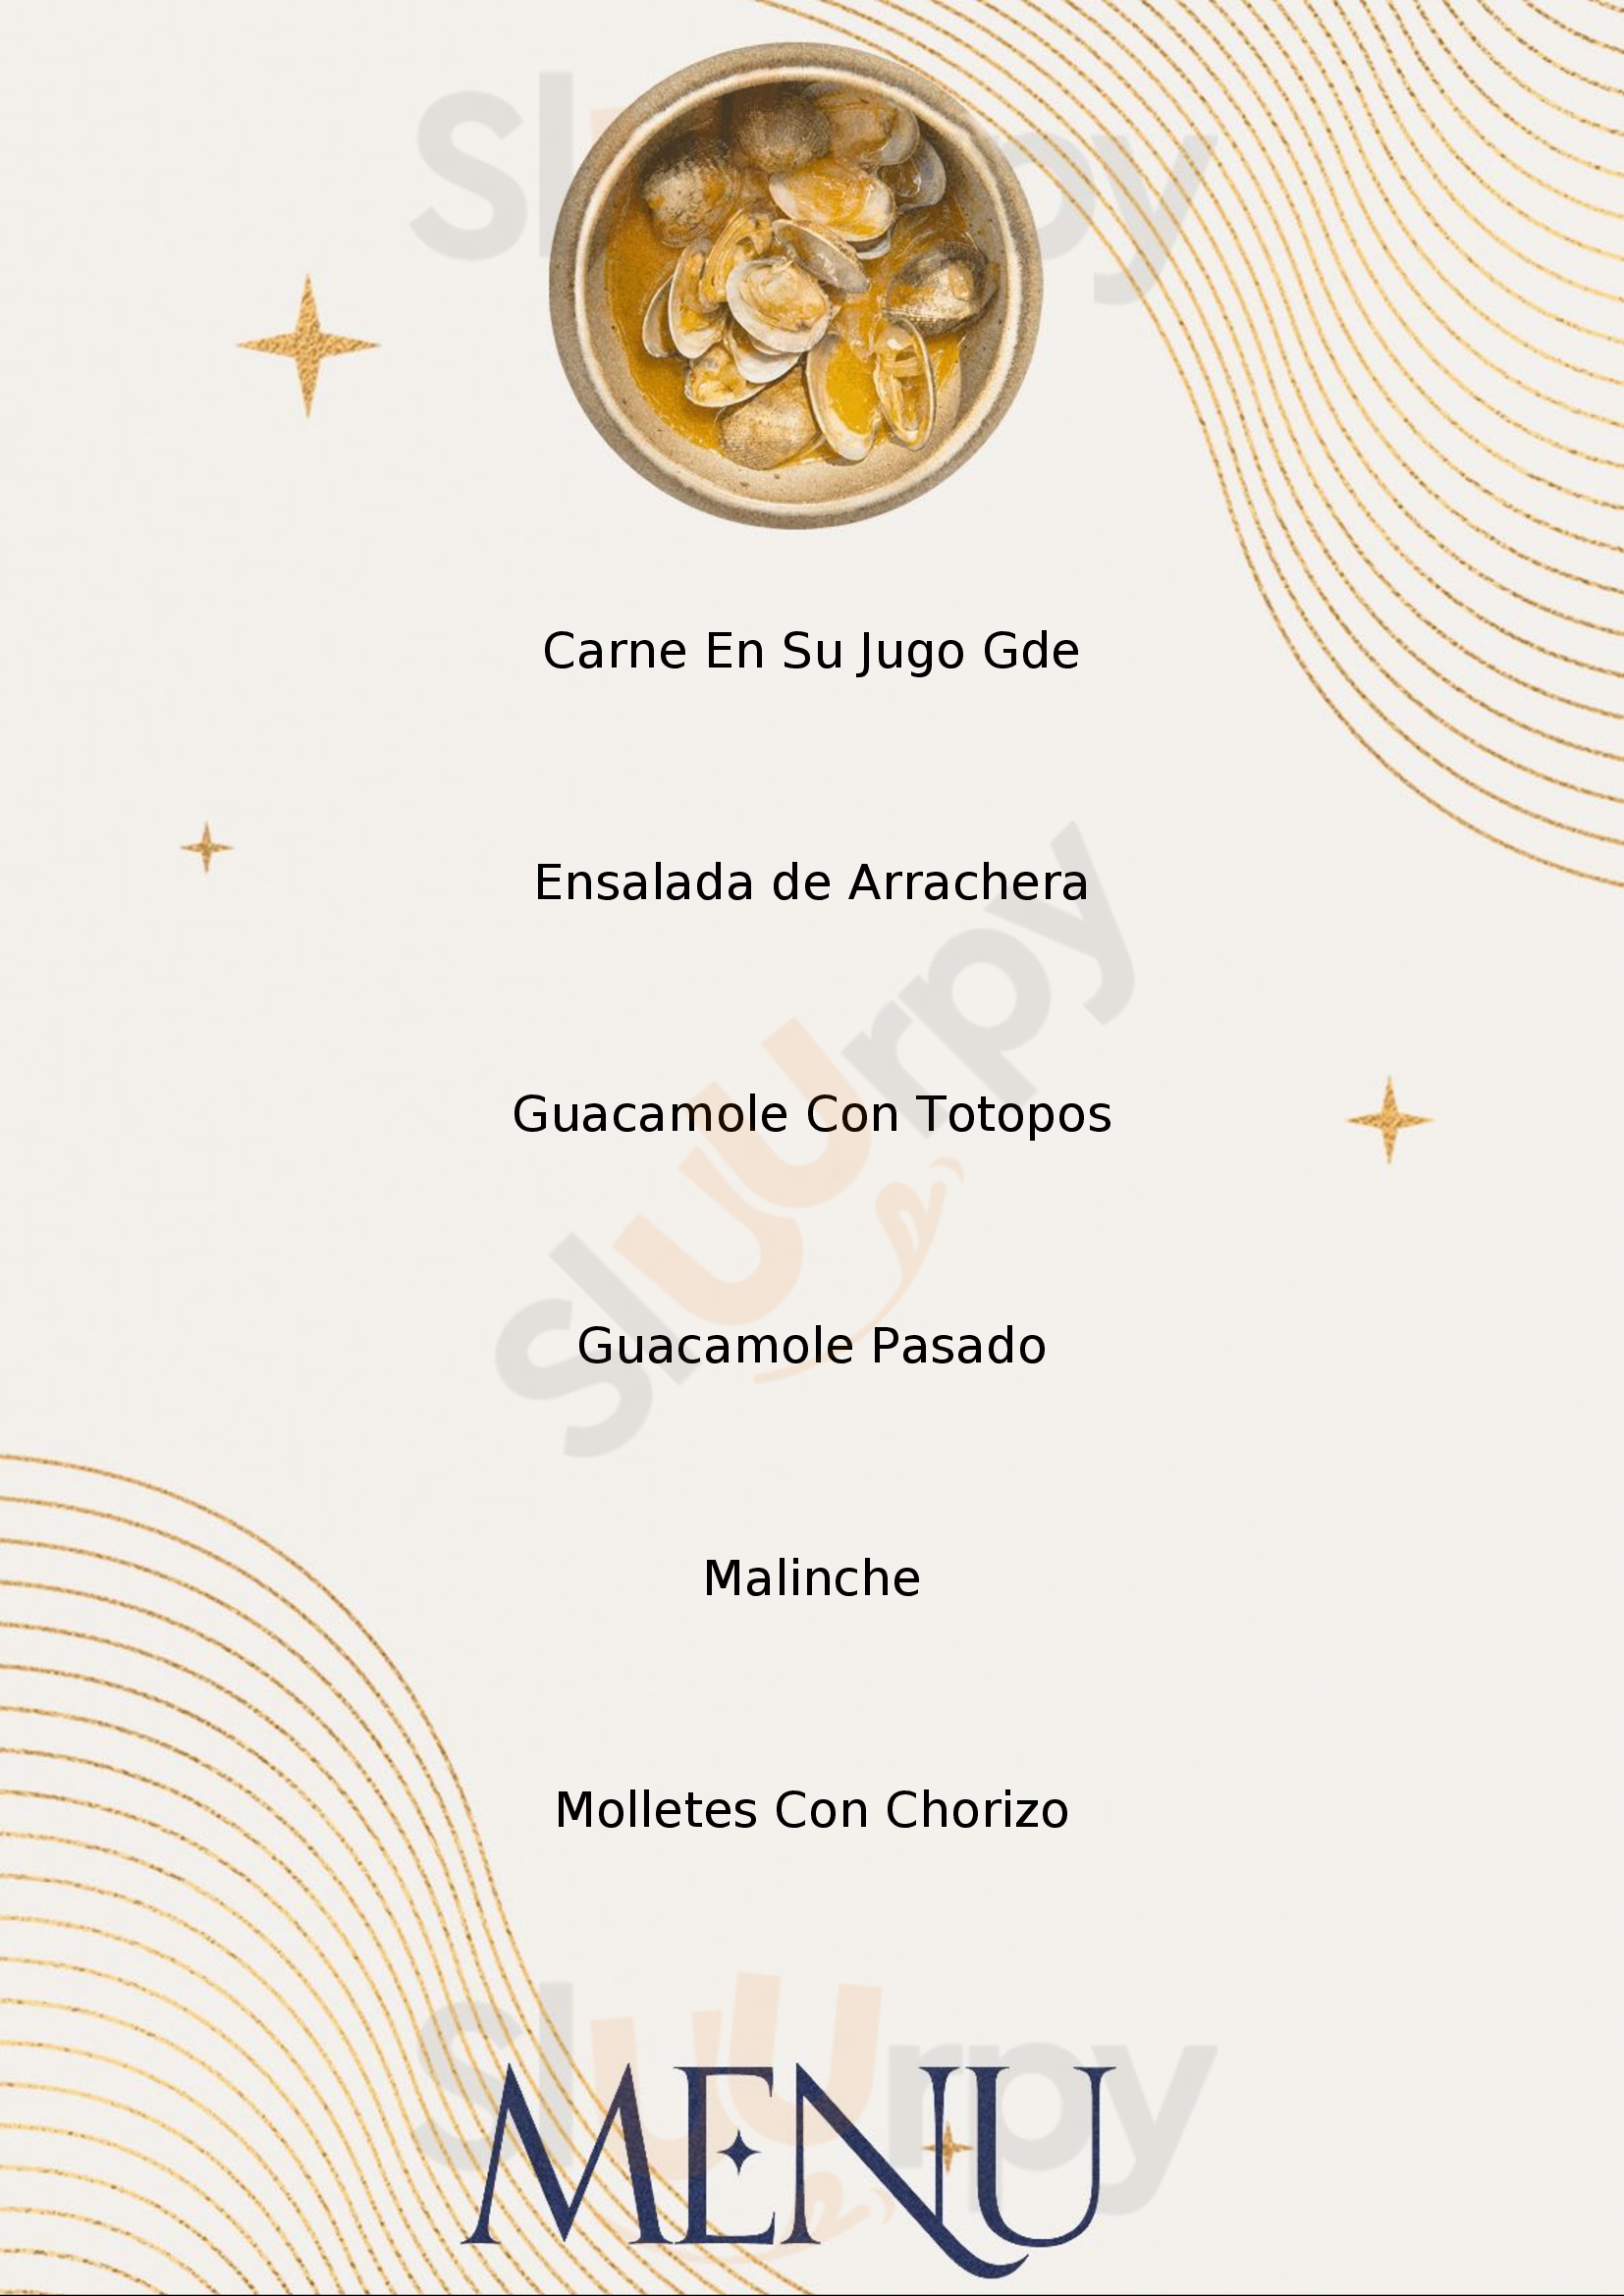 Los Grandes Restaurante Guadalajara Menu - 1